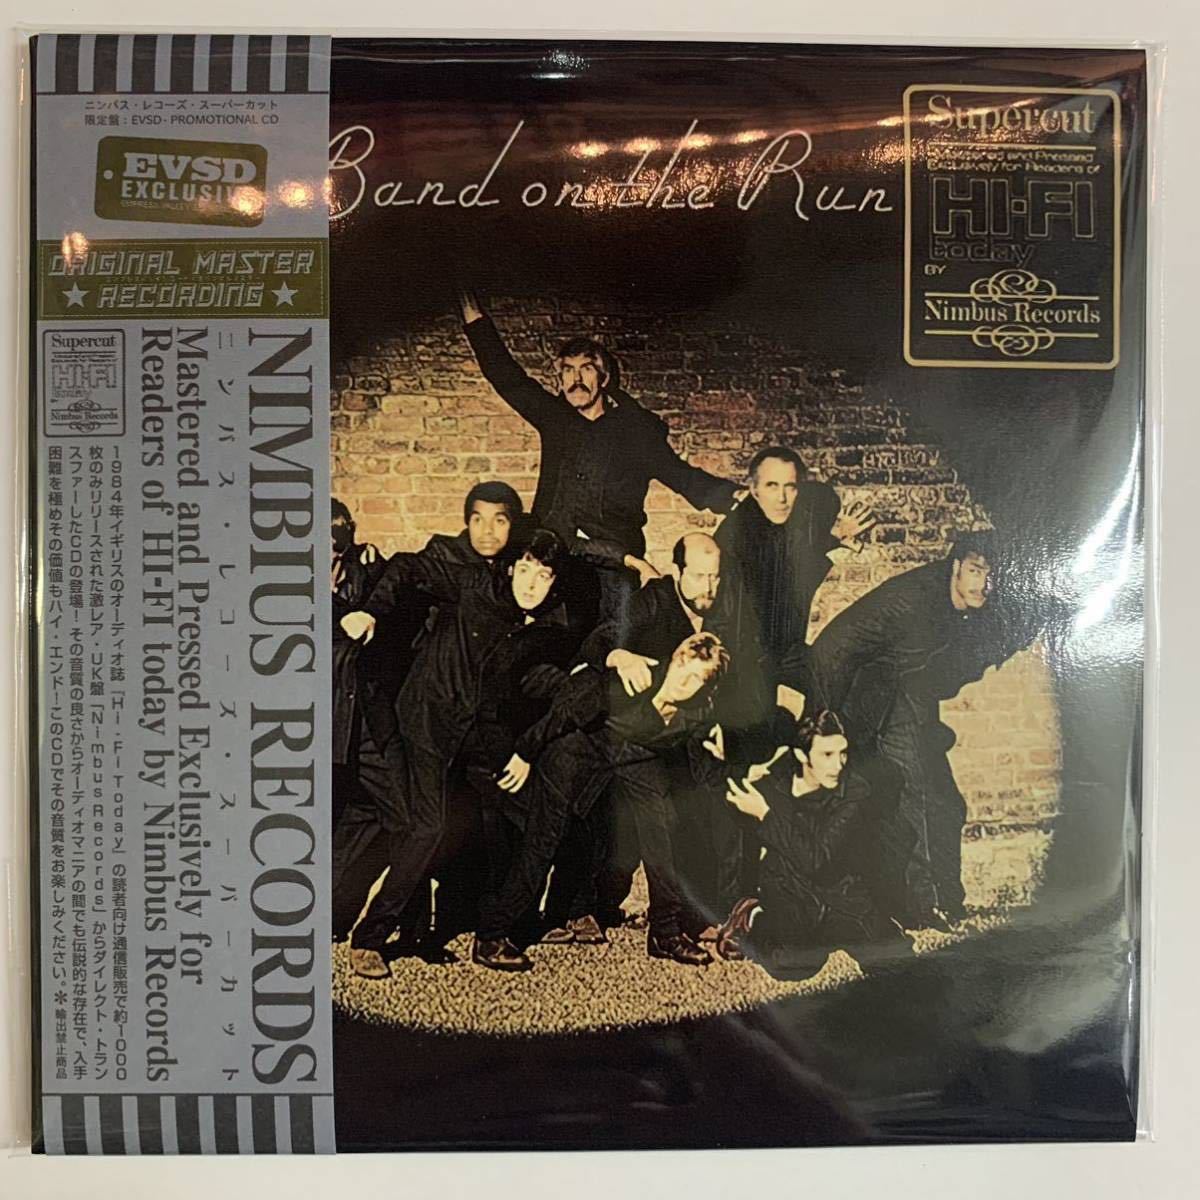 Paul McCartney and the Wings / Band On the Run Nimbus Records Supercut 高音質盤の最高峰ニンバスレコード！デジタル化！_画像1